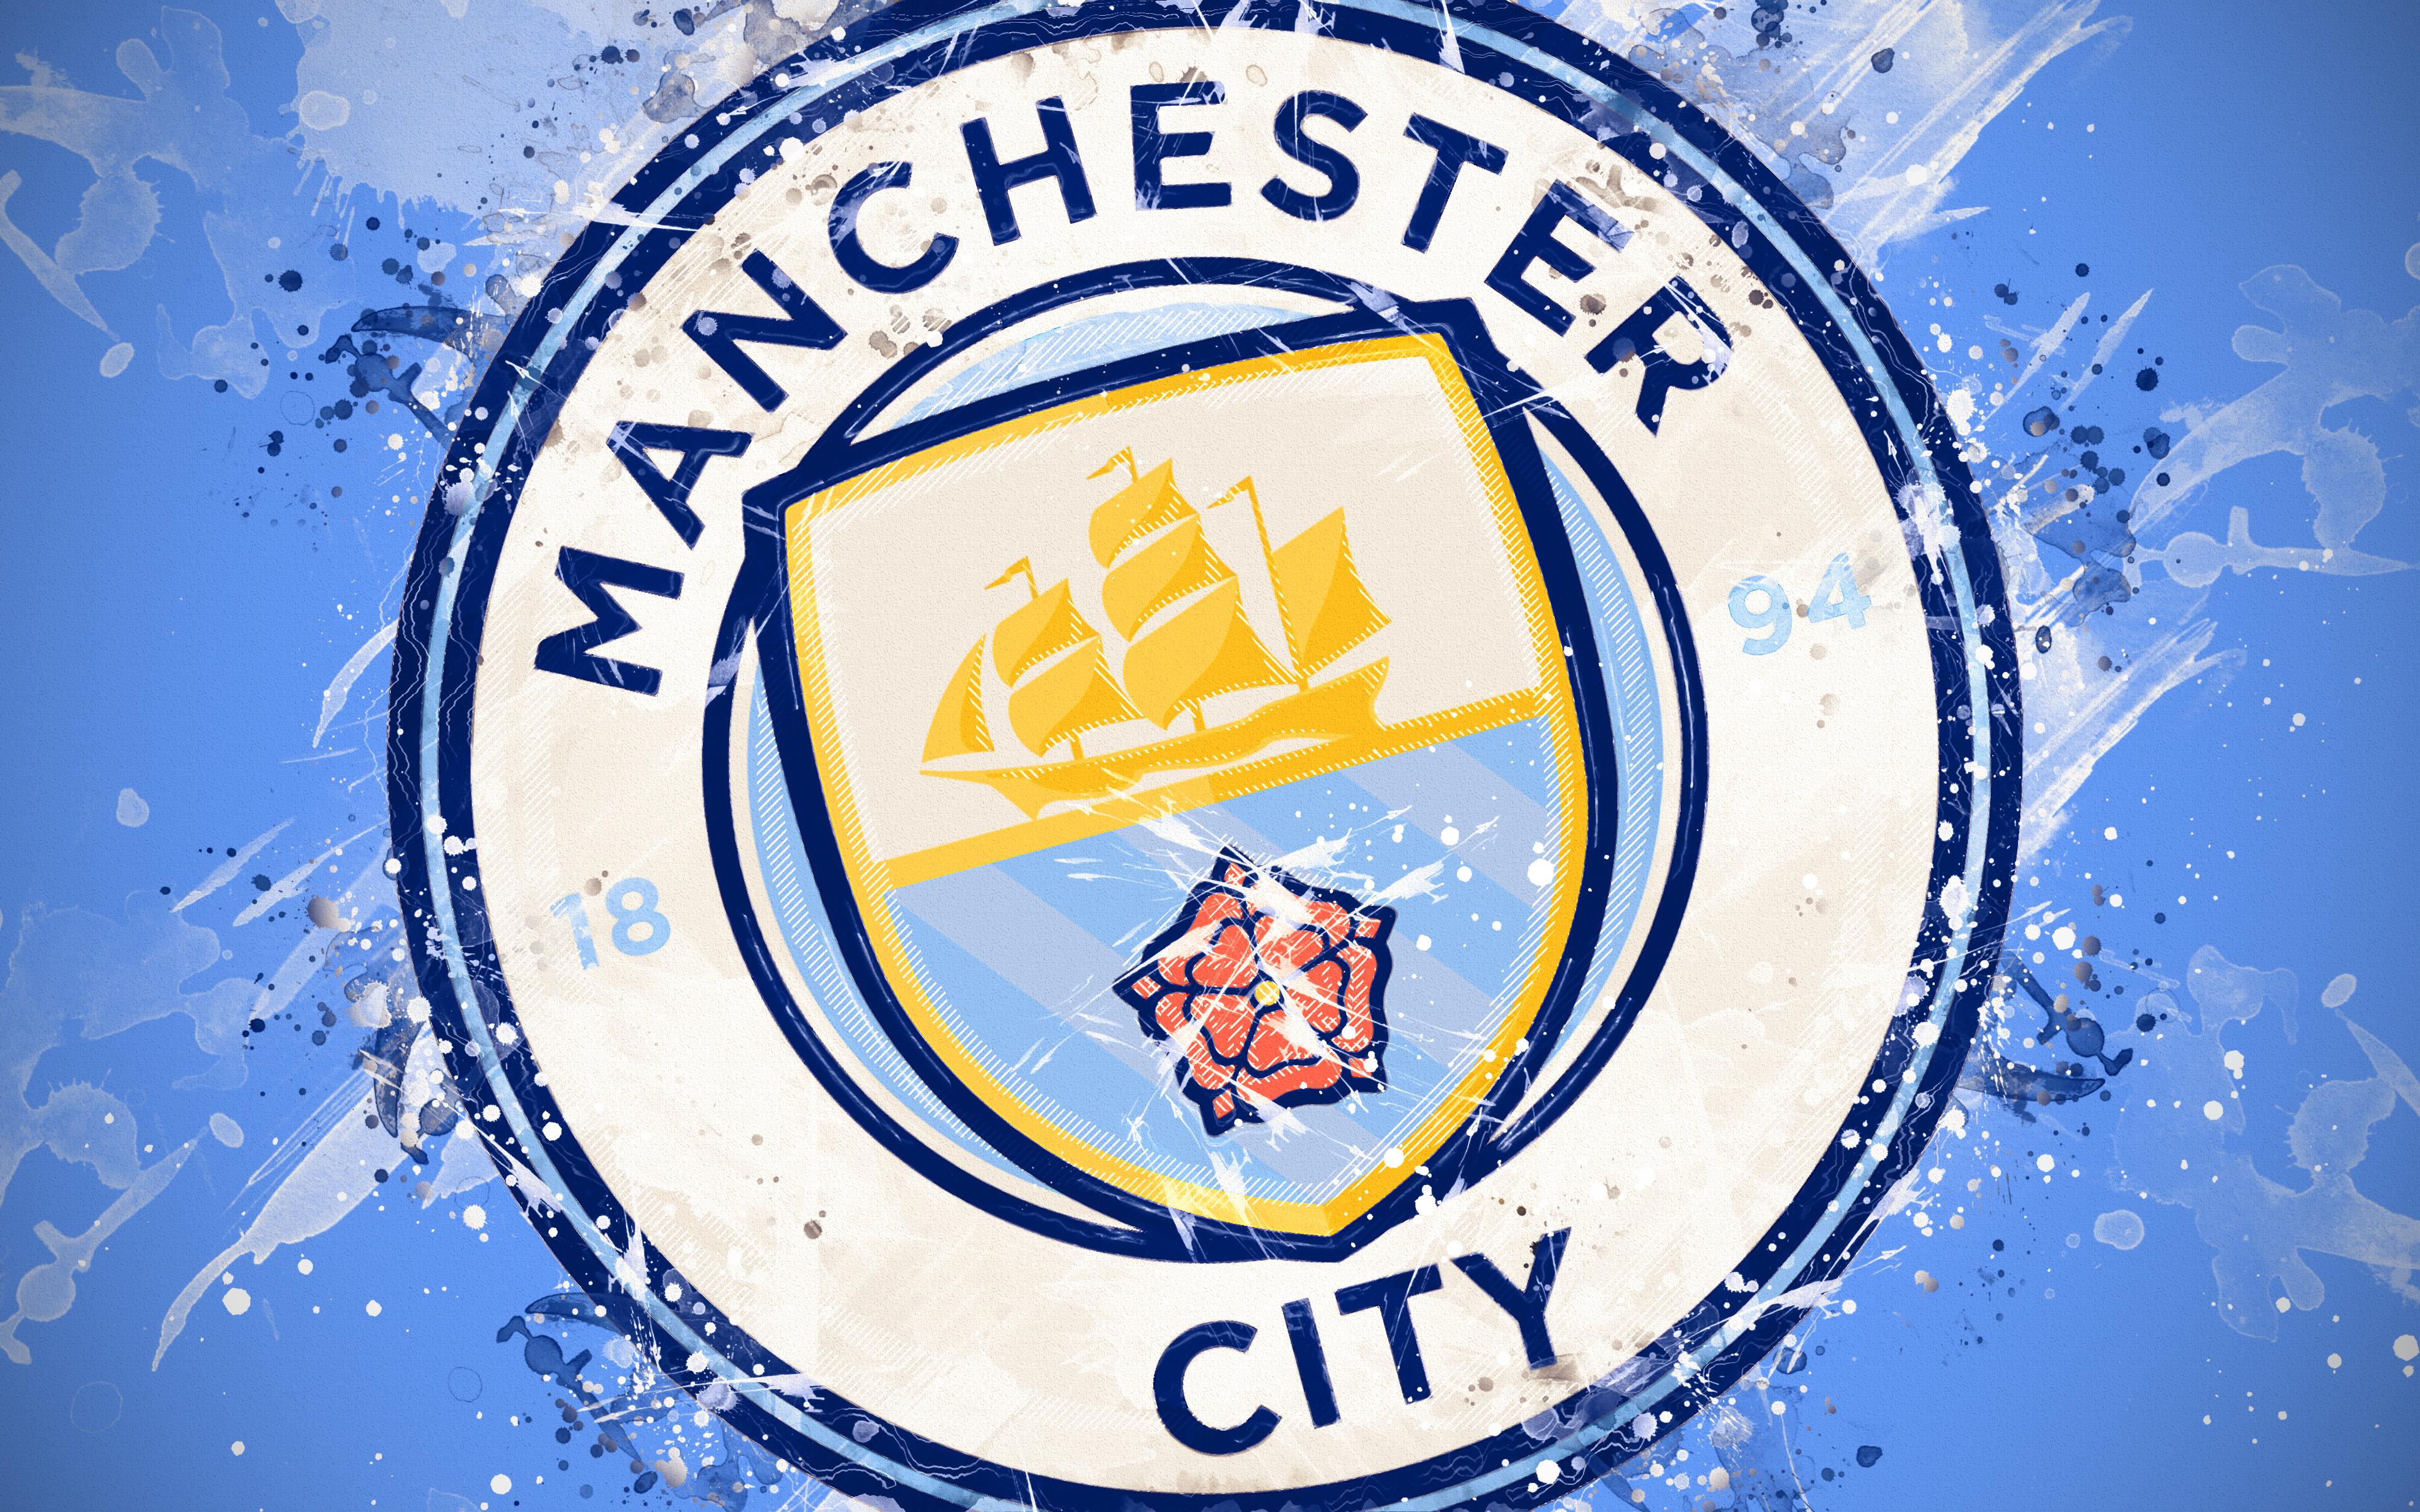 Manchester City Official Logo Image | grandcollector.com